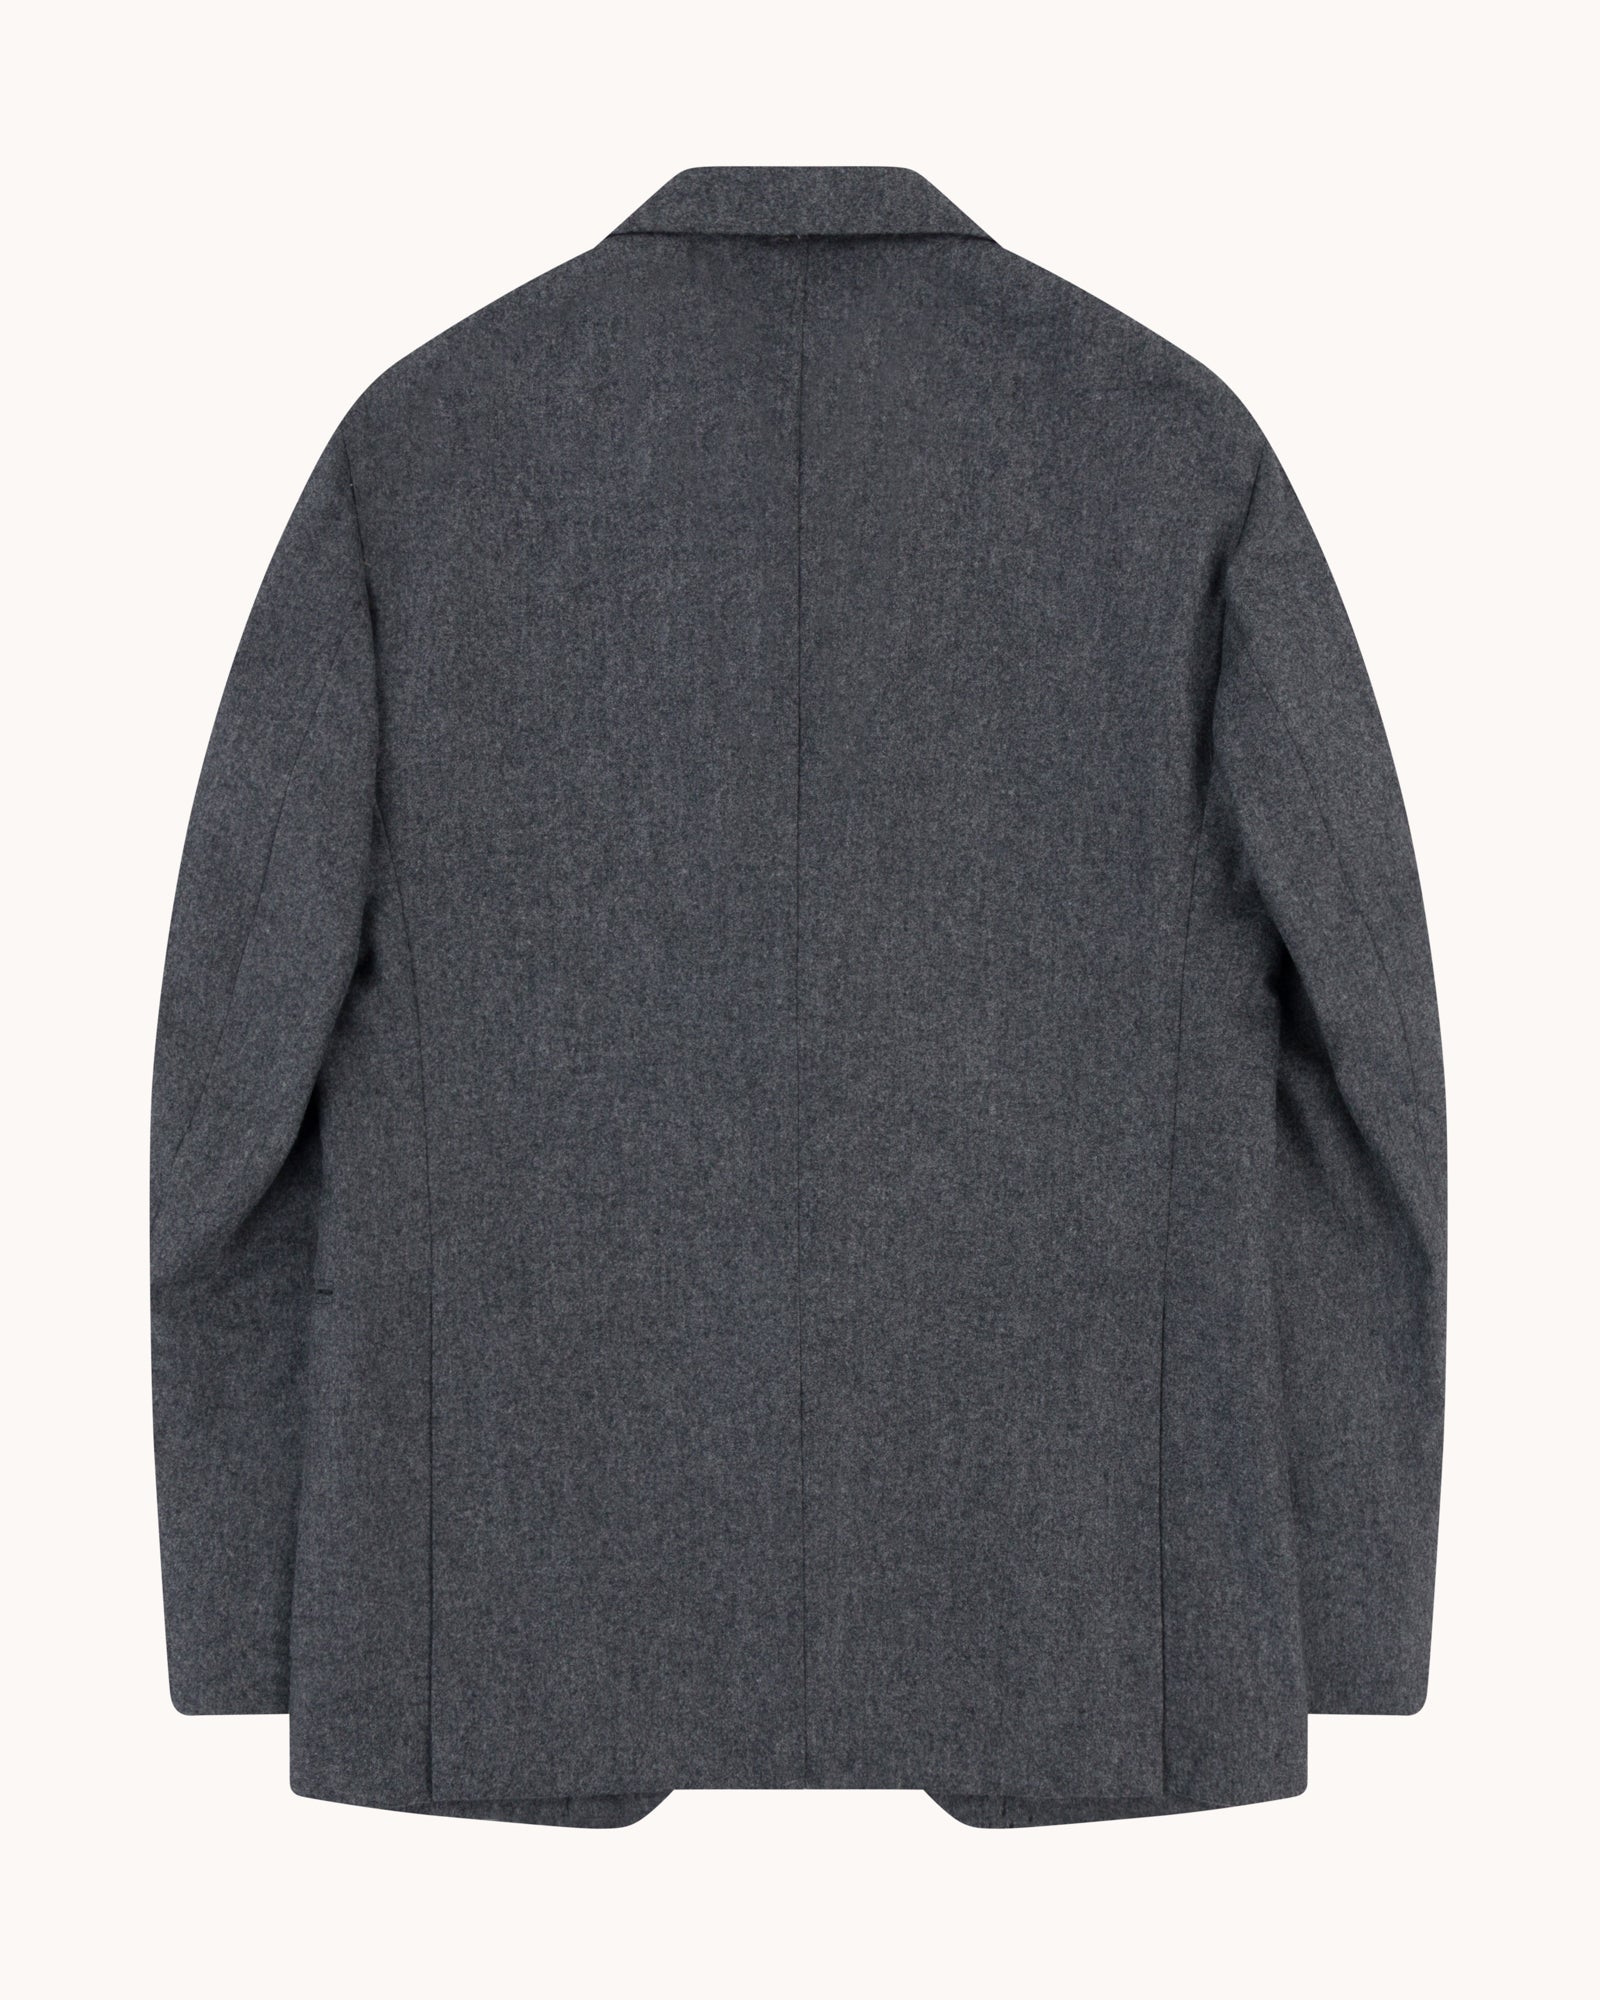 Sport Jacket - Mid Grey Woollen Flannel